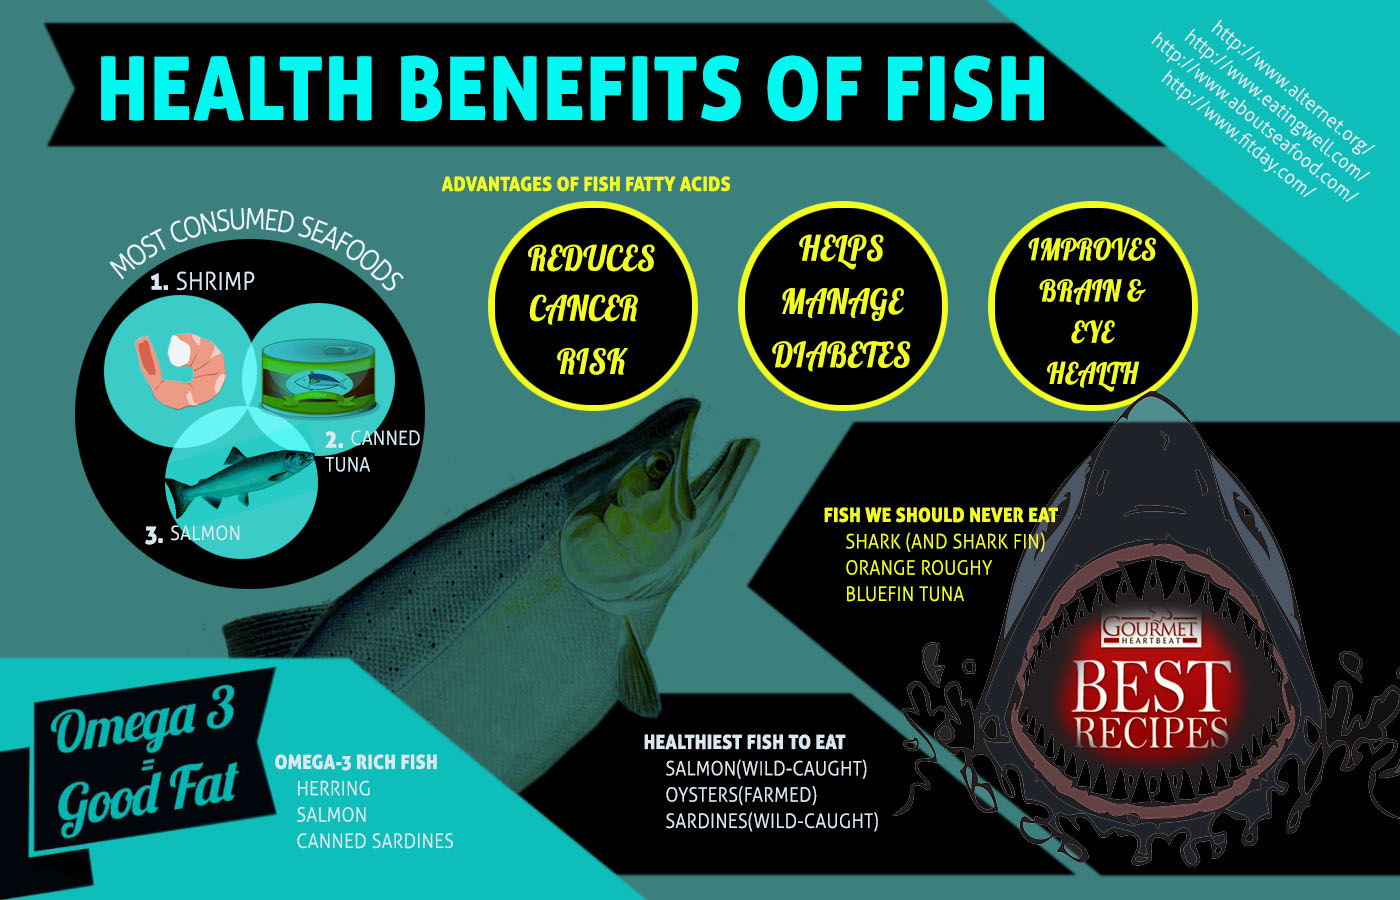 Fatty fish benefits